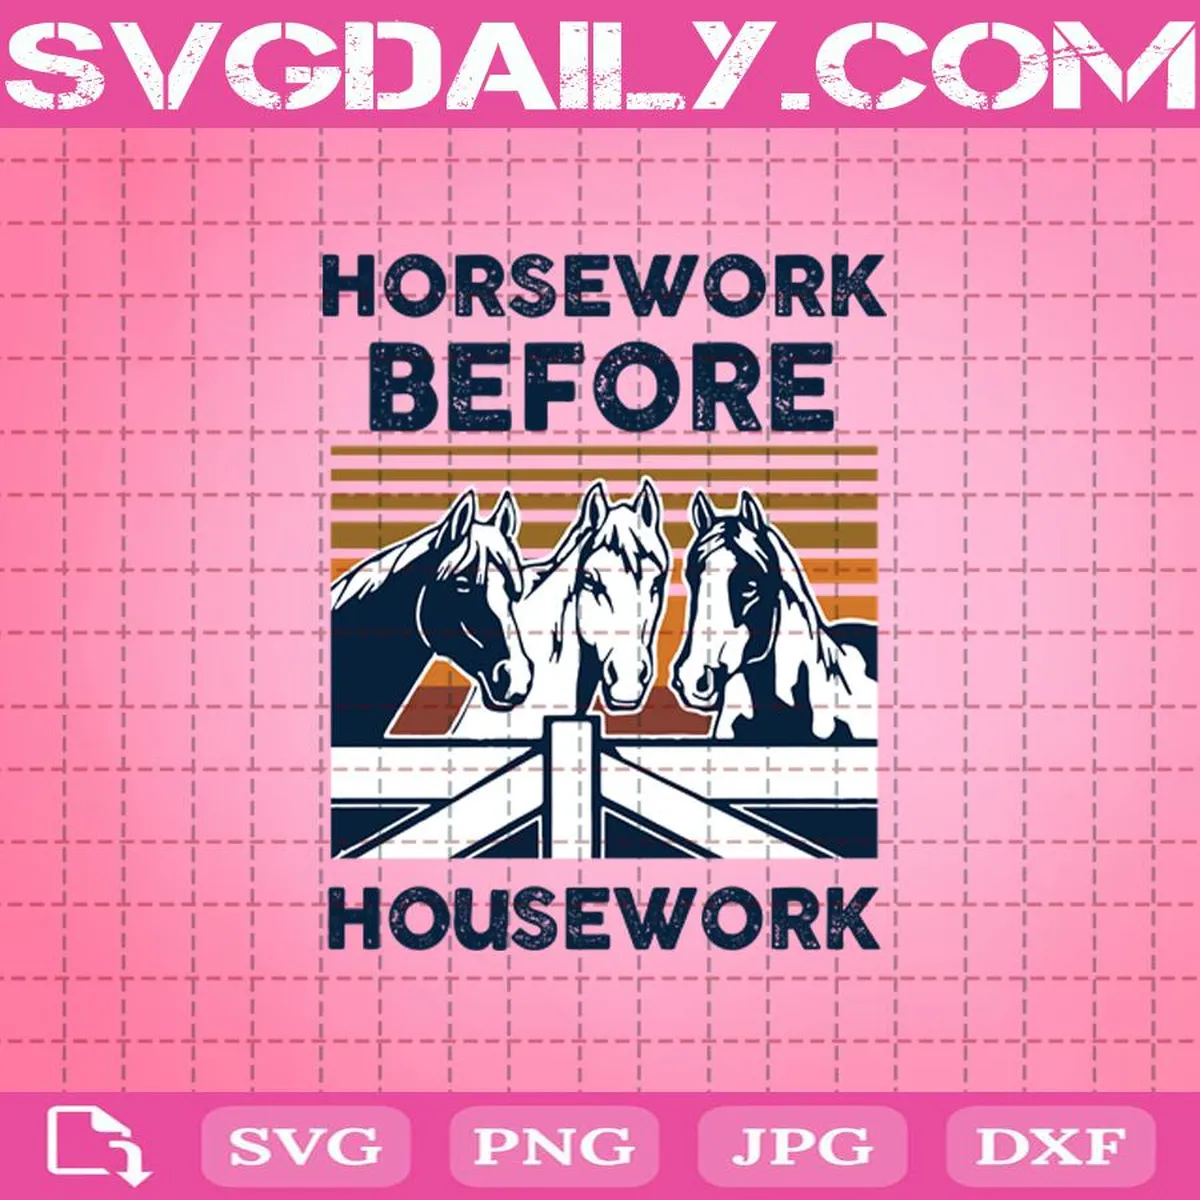 Horsework Before Housework Svg, Horse Svg, Farm Life Svg, Farmer Svg, Horsework Svg Png Dxf Eps AI Instant Download